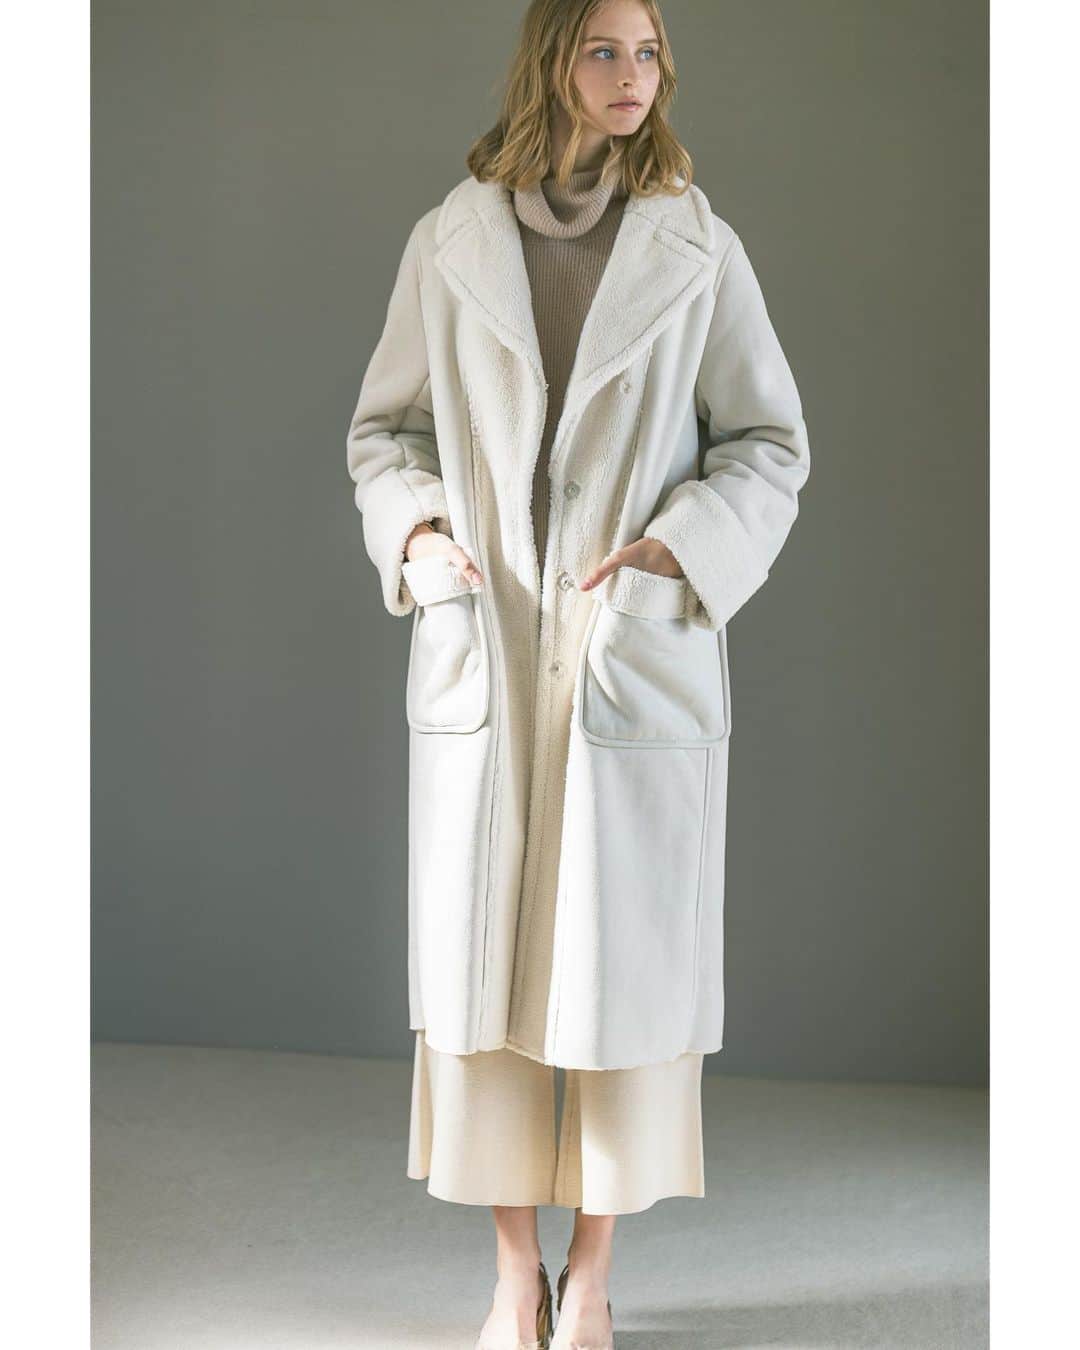 RENAI KEIKAKUのインスタグラム：「ムートン×ボアのデザインでトレンド感満載のロングコート❤︎Iラインですっきり仕上げながらもボアの風合いを活かしたボリューミーなシルエット💐﻿ 裏は全面ボアなので、見た目だけでなく実際に着てもしっかり暖か😌💕﻿ カジュアルコーデにザックリ羽織っても、甘めのスタイリングと合わせても、上手に馴染むアイテムです✨﻿ ﻿ ☑︎mouton long coat﻿ ¥18,000+tax﻿ ﻿ ☑︎lace embroidery turtleneck knit﻿ ¥8,500+tax﻿ ﻿ ☑︎knit flare pants﻿ ¥7,500+tax﻿ ﻿ #ren #renaikeikaku #レンアイケイカク #ren_style」